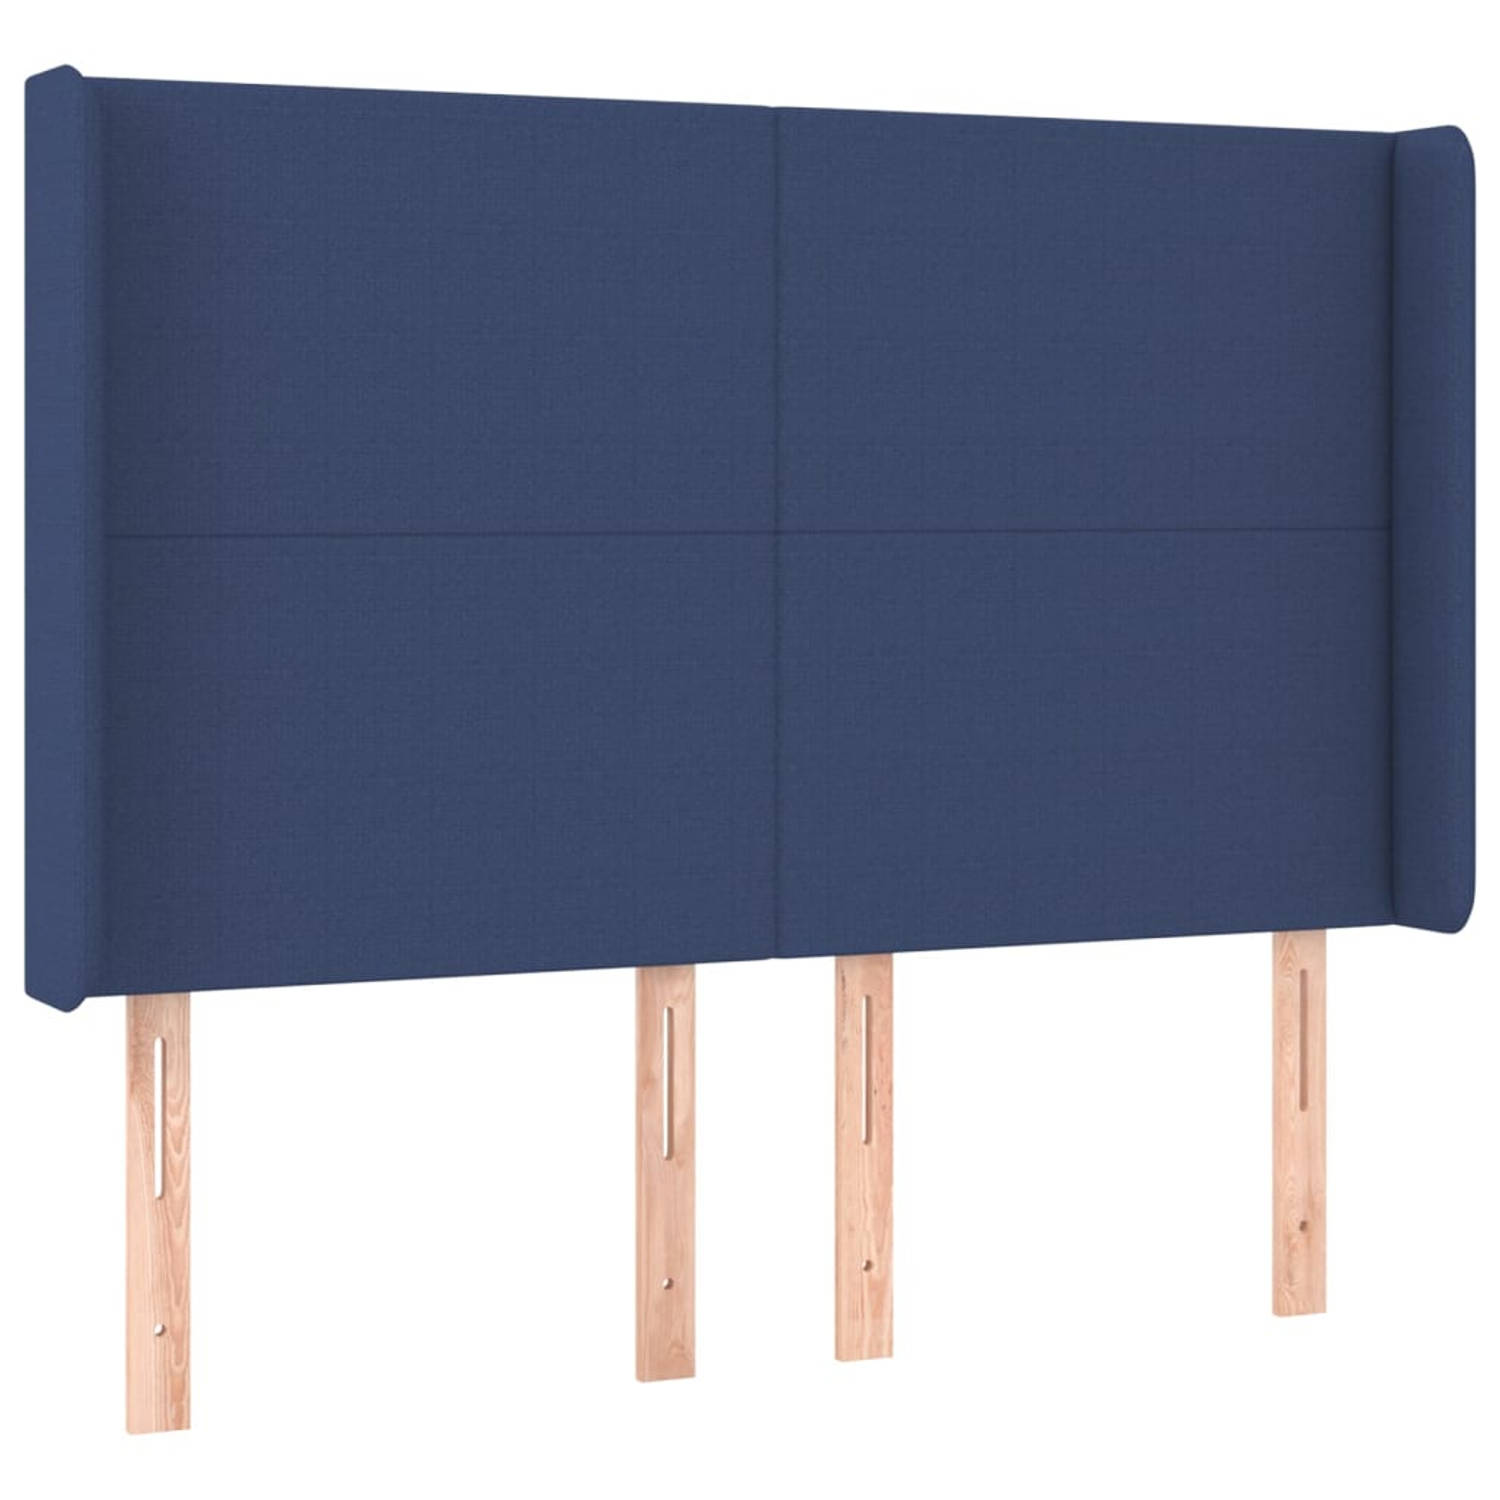 The Living Store Hoofdeind - Bedaccessoires - 147x16x118/128 cm - Blauw stof en hout